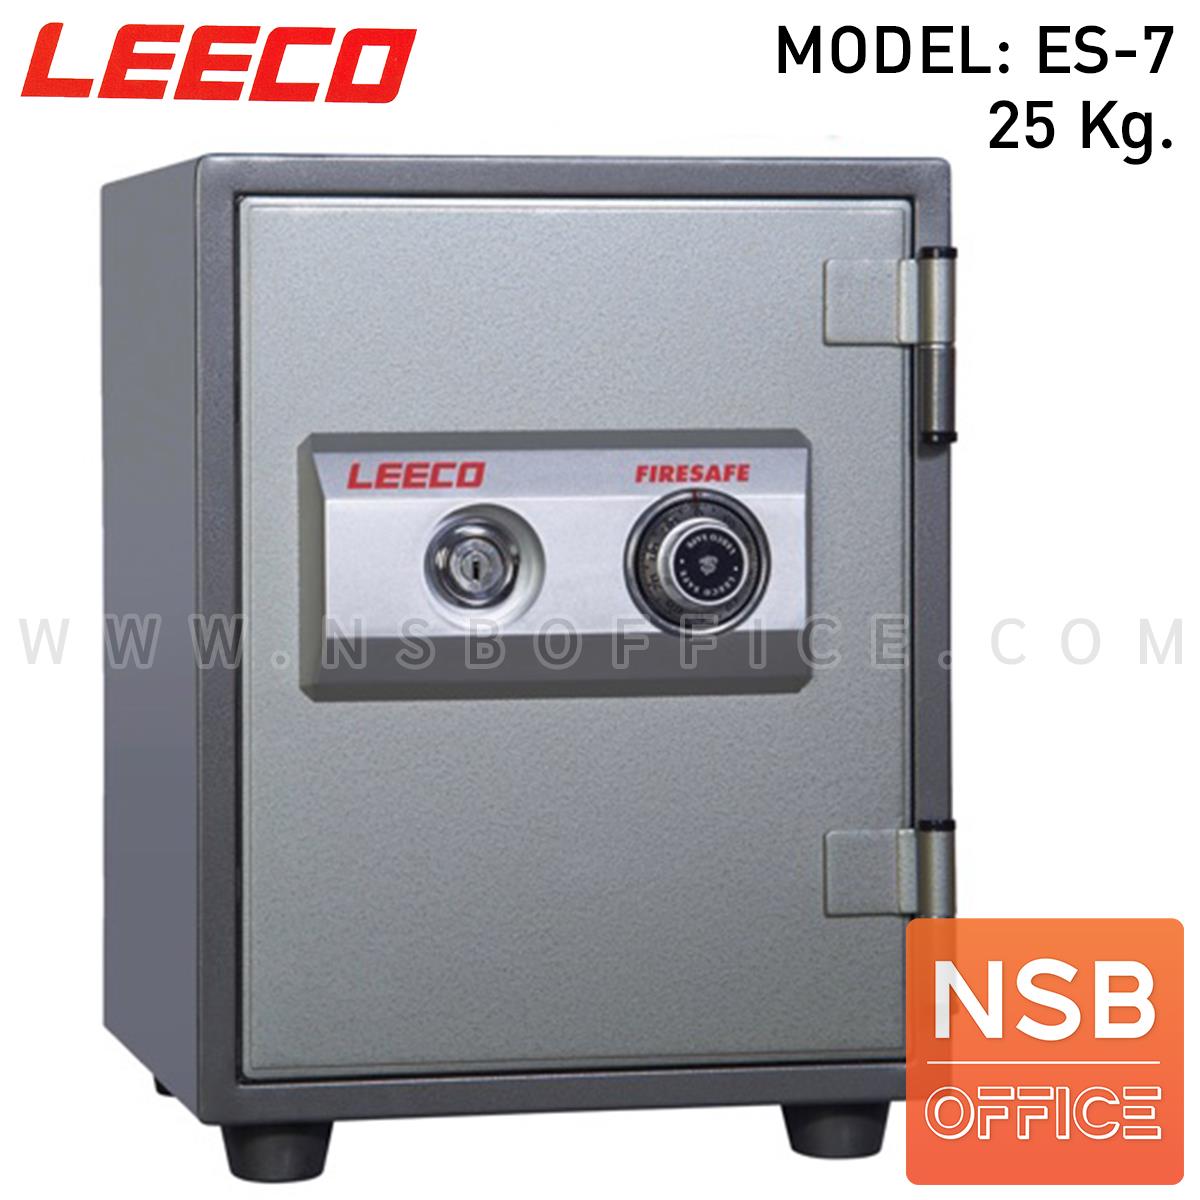 F02A005:ตู้เซฟนิรภัย 25 กก. ลีโก้ รุ่น LEECO-ES-7 มี 1 กุญแจ 1 รหัส (เปลี่ยนรหัสไม่ได้)   